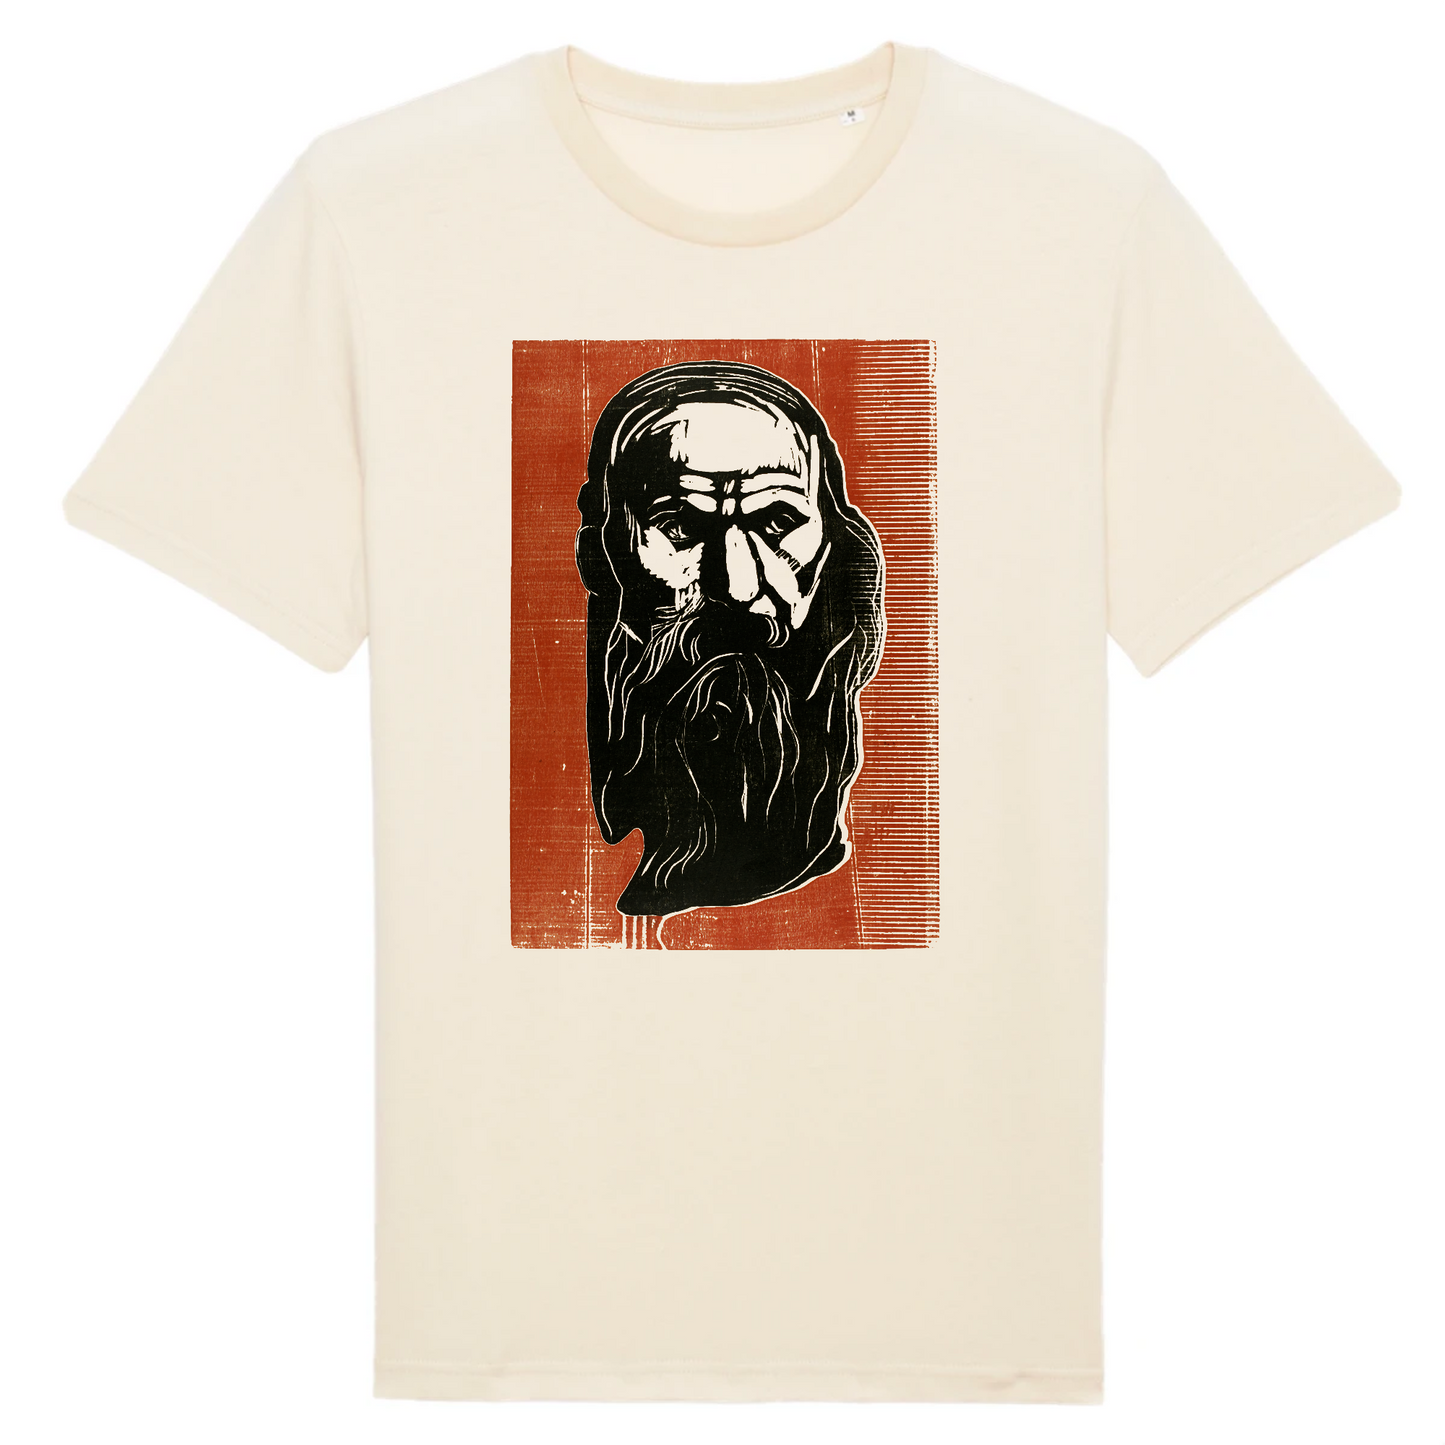 Head of an Old Man with Beard by Edvard Munch, 1902 - Organic Cotton T-Shirt